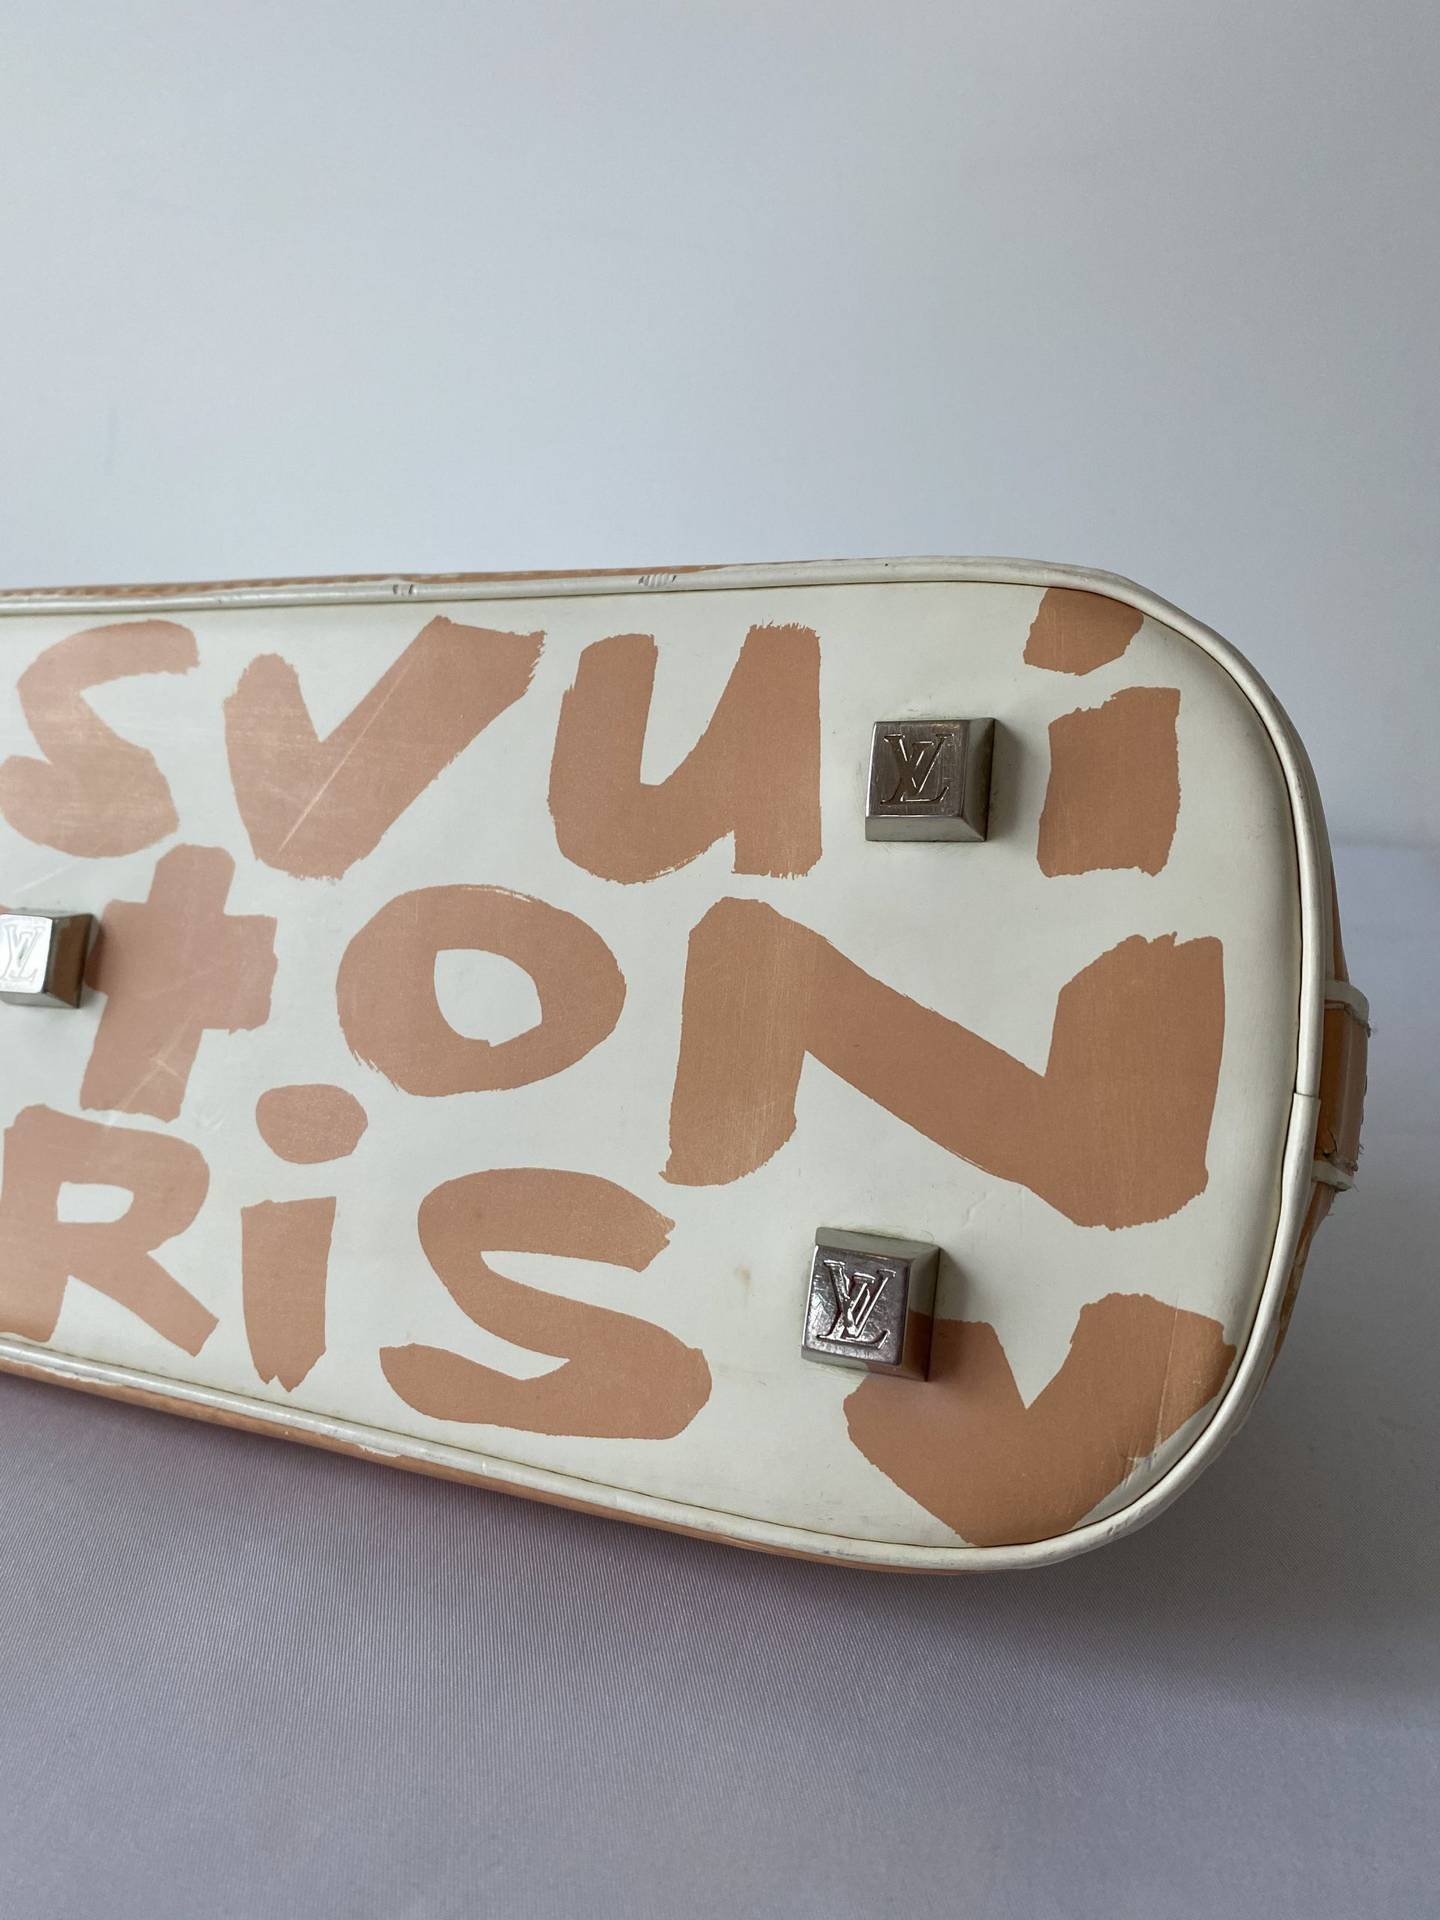 Louis Vuitton Beige Graffiti Horizontal Alma Bag